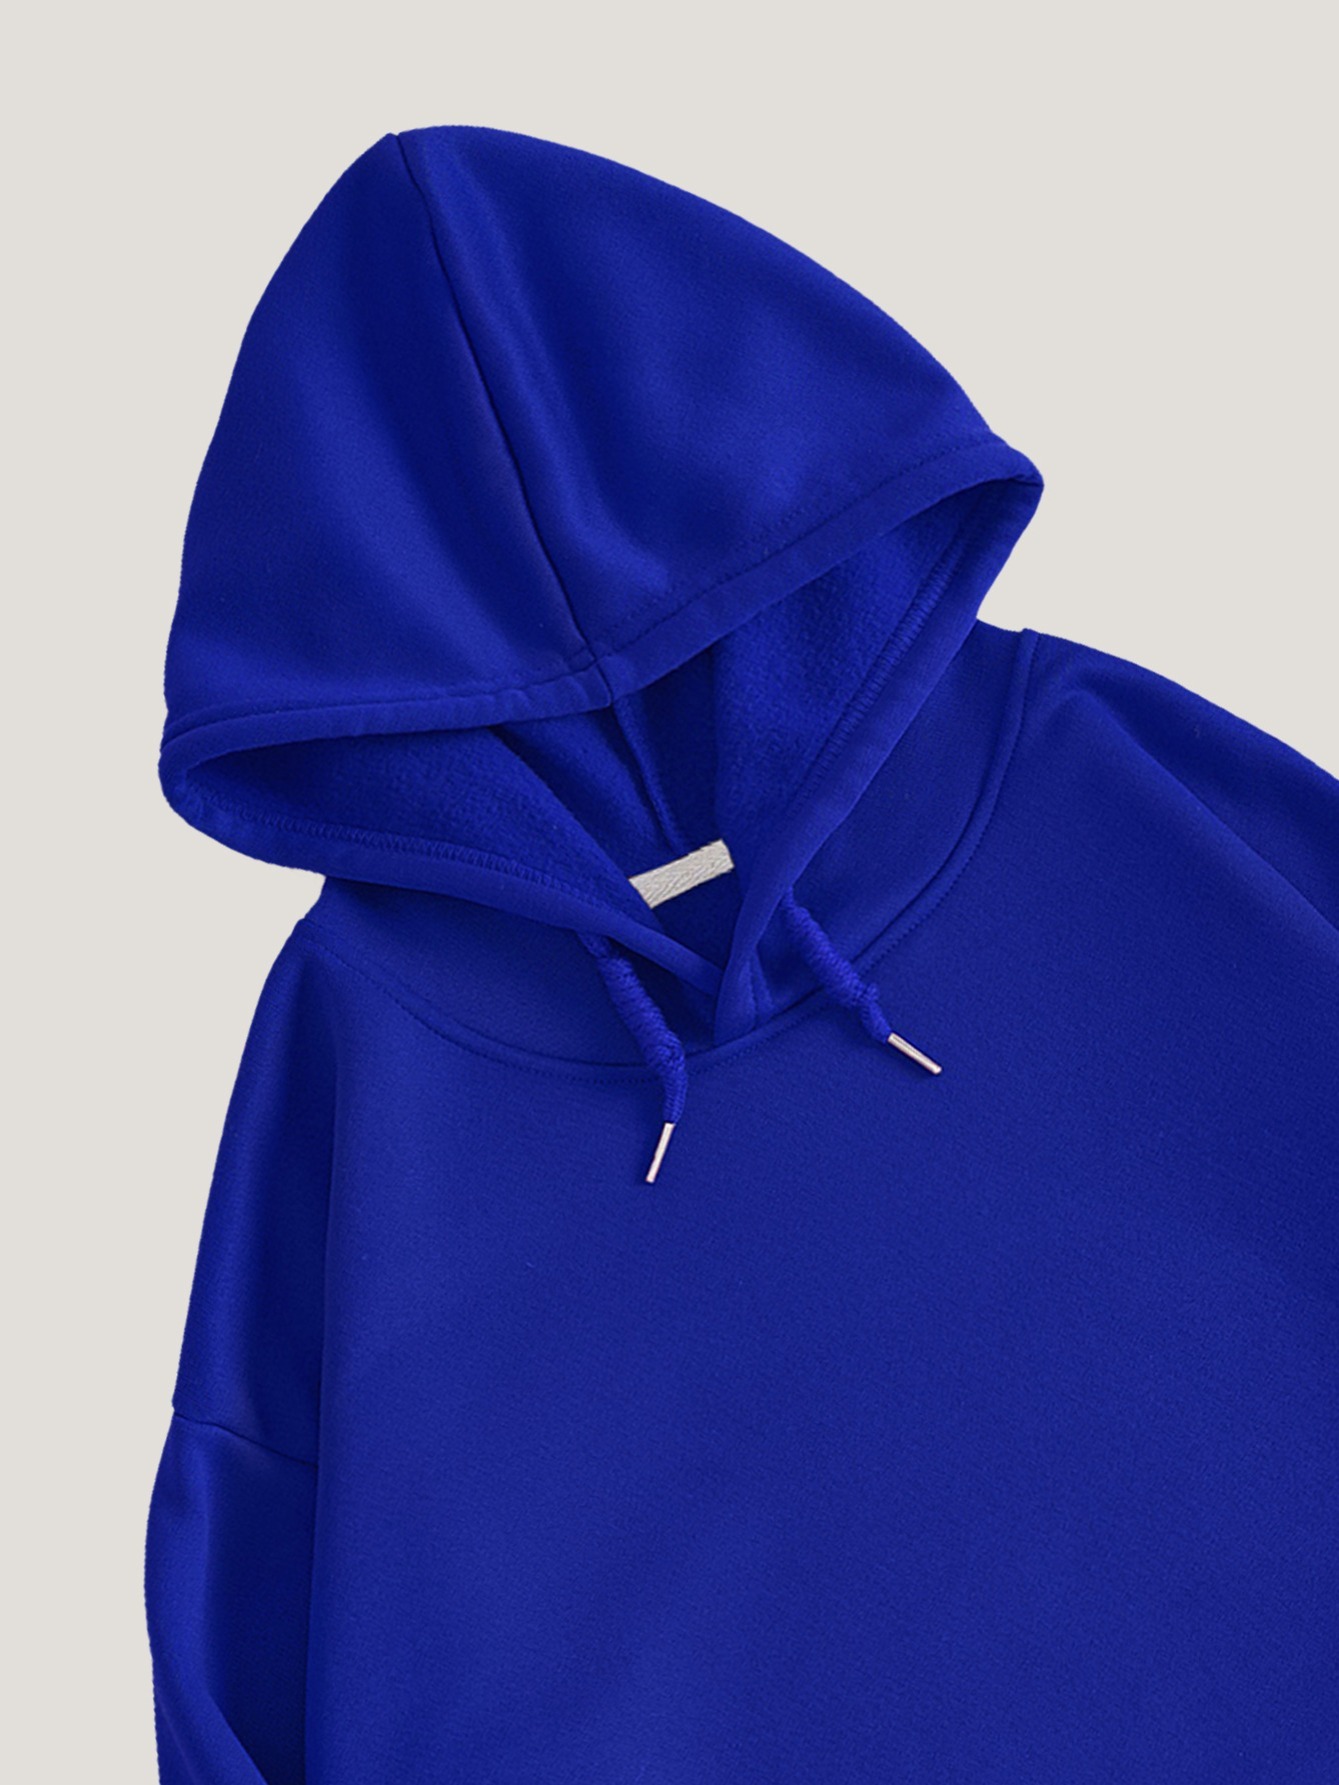 Casual Plain Hooded Zip Up Long Sleeve Royal Blue Women Sweatshirts  (Women's)